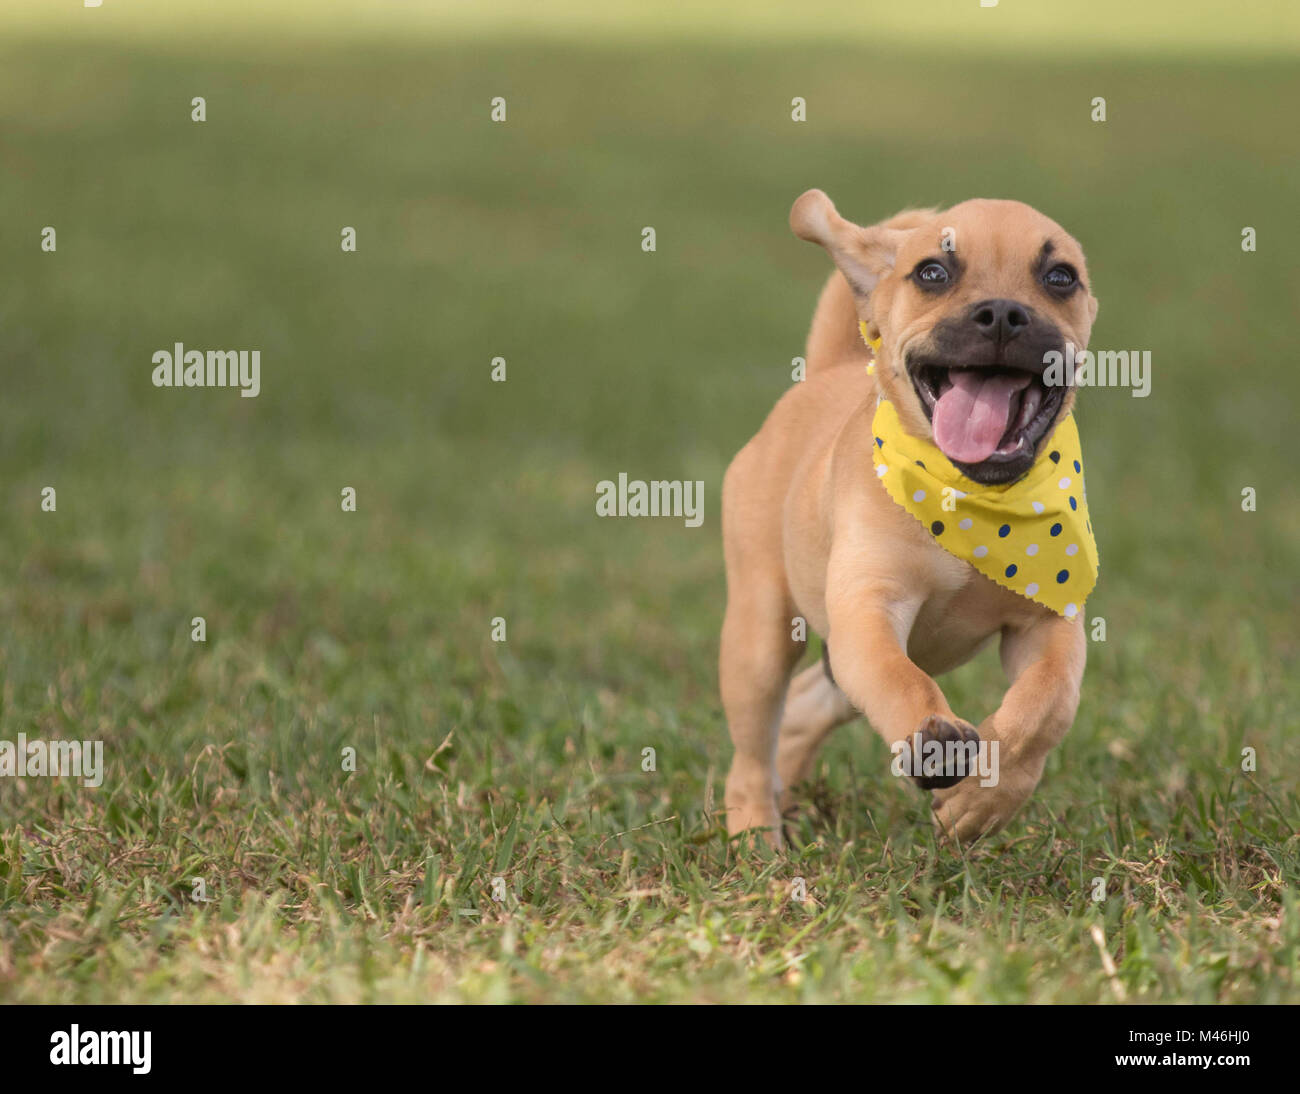 Adorable puppy running on grass toward camera wearing polka dot bandana Stock Photo